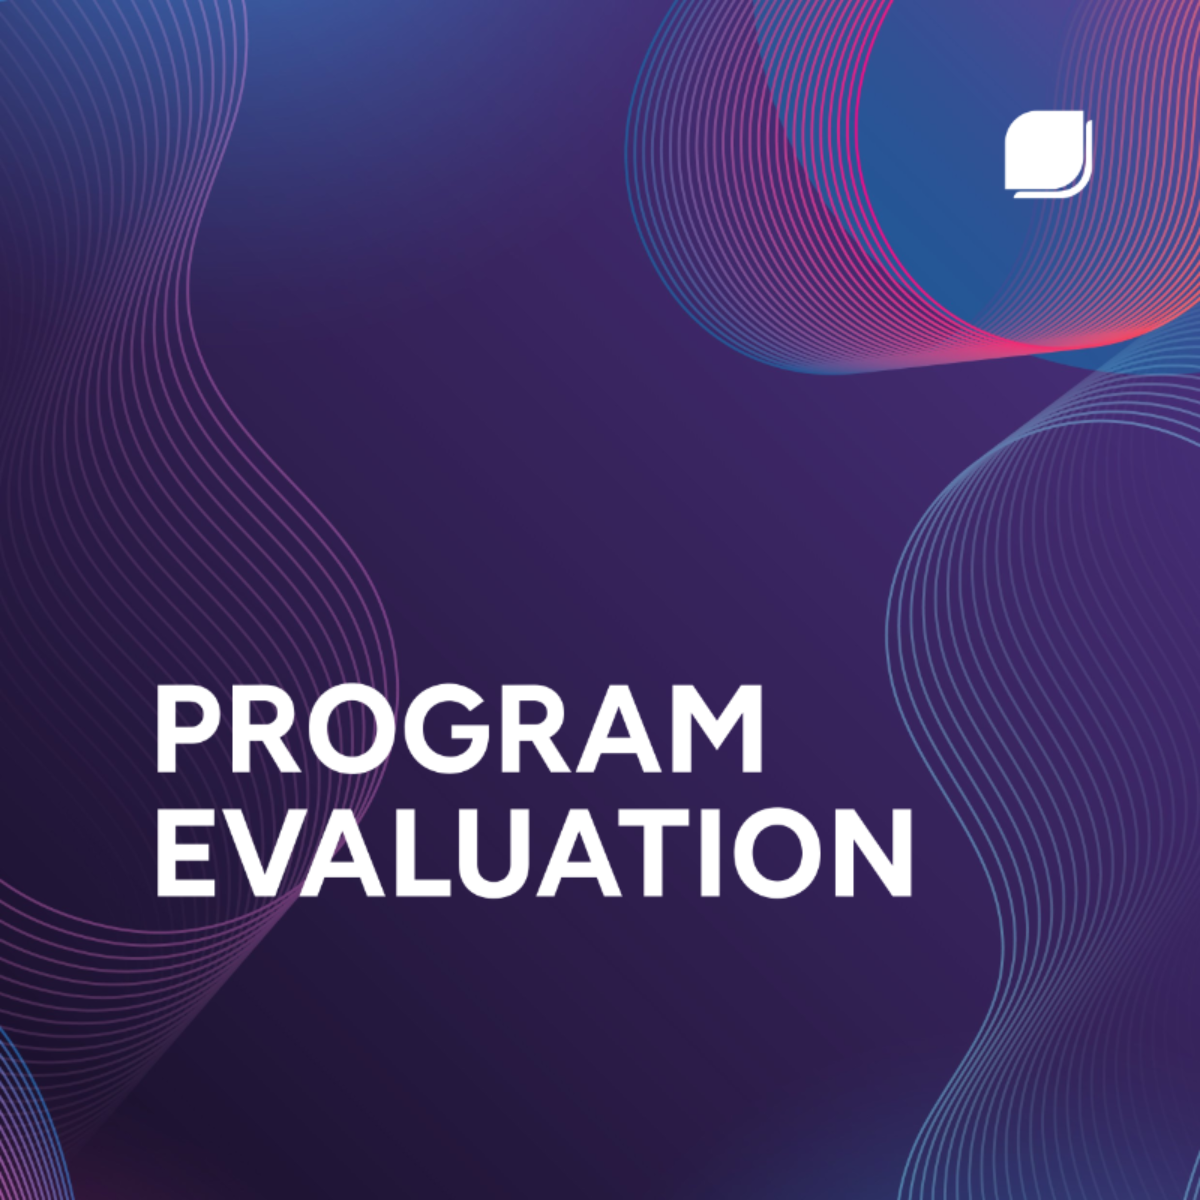 Program Evaluation Template